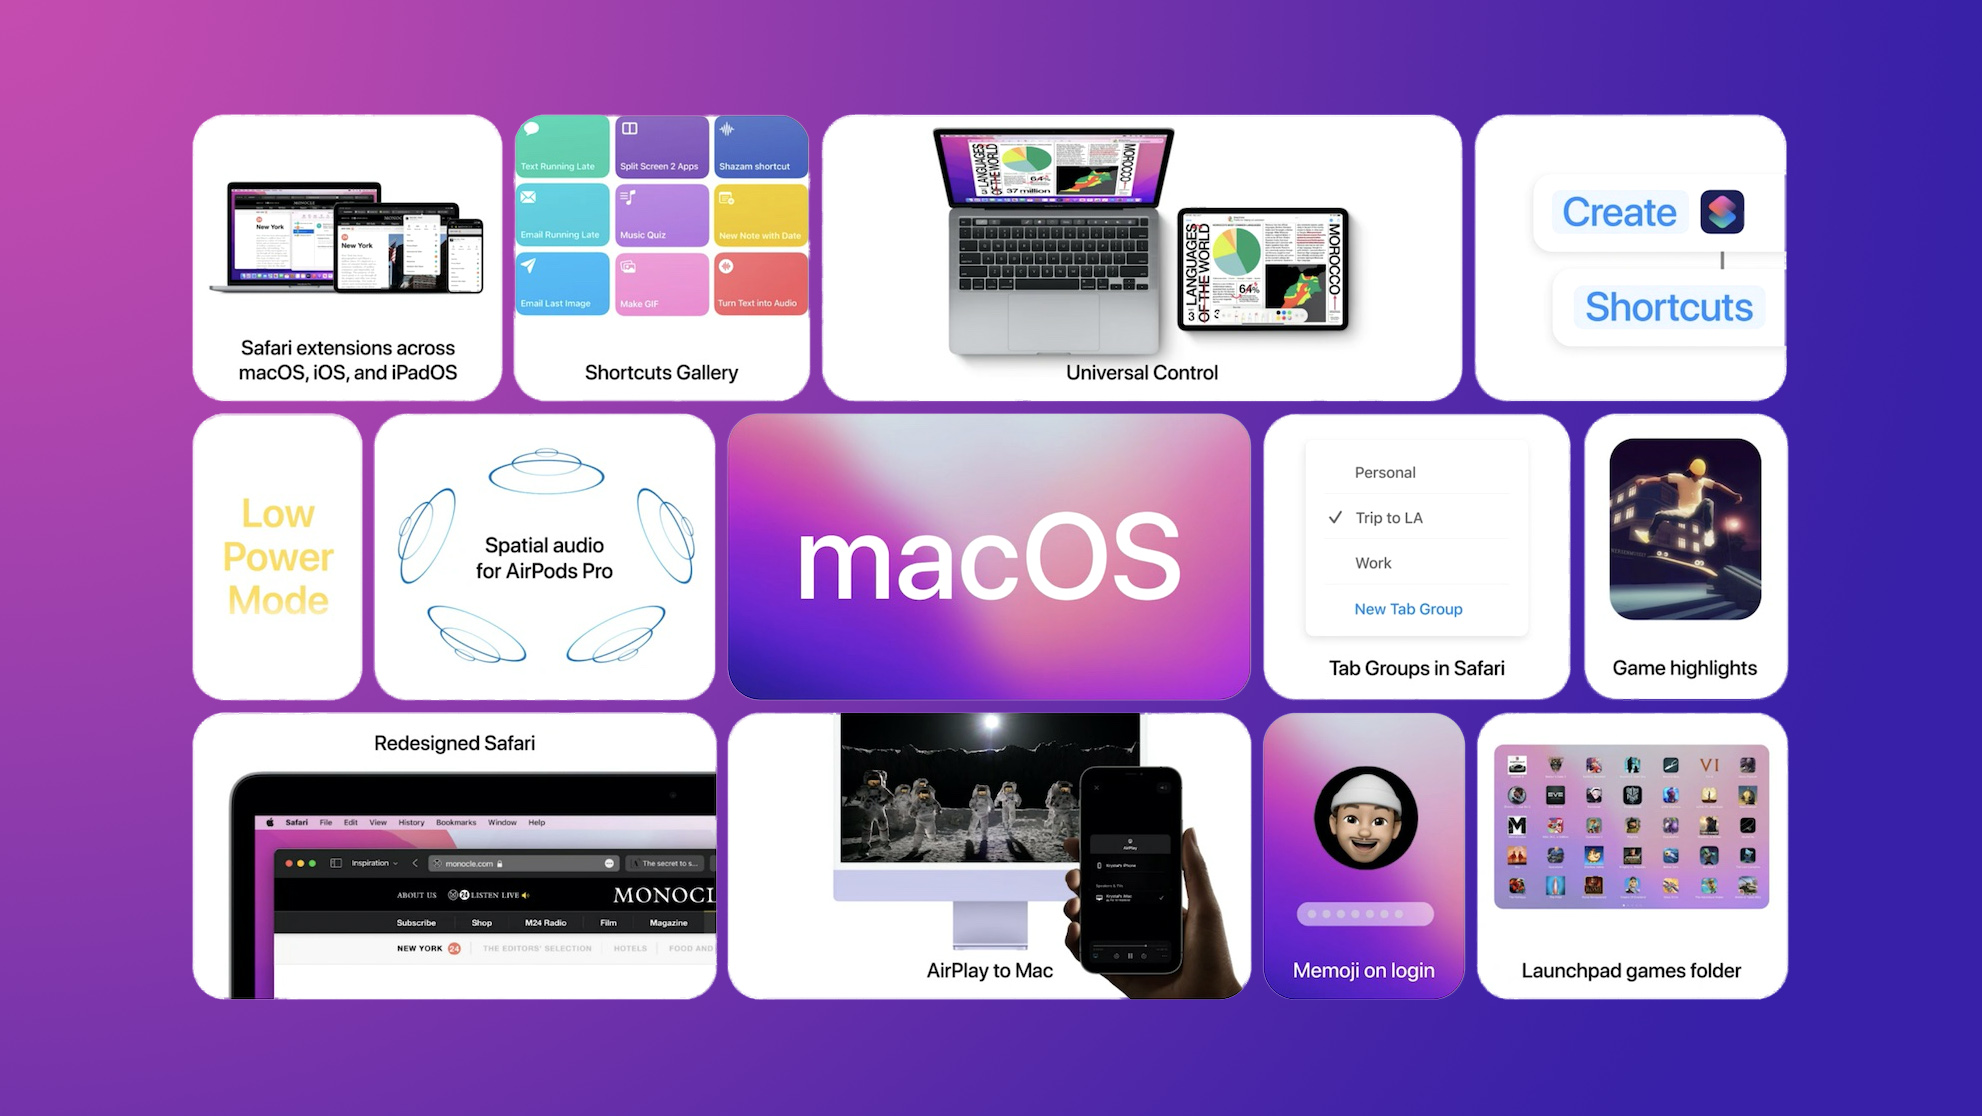 smart converter app for mac